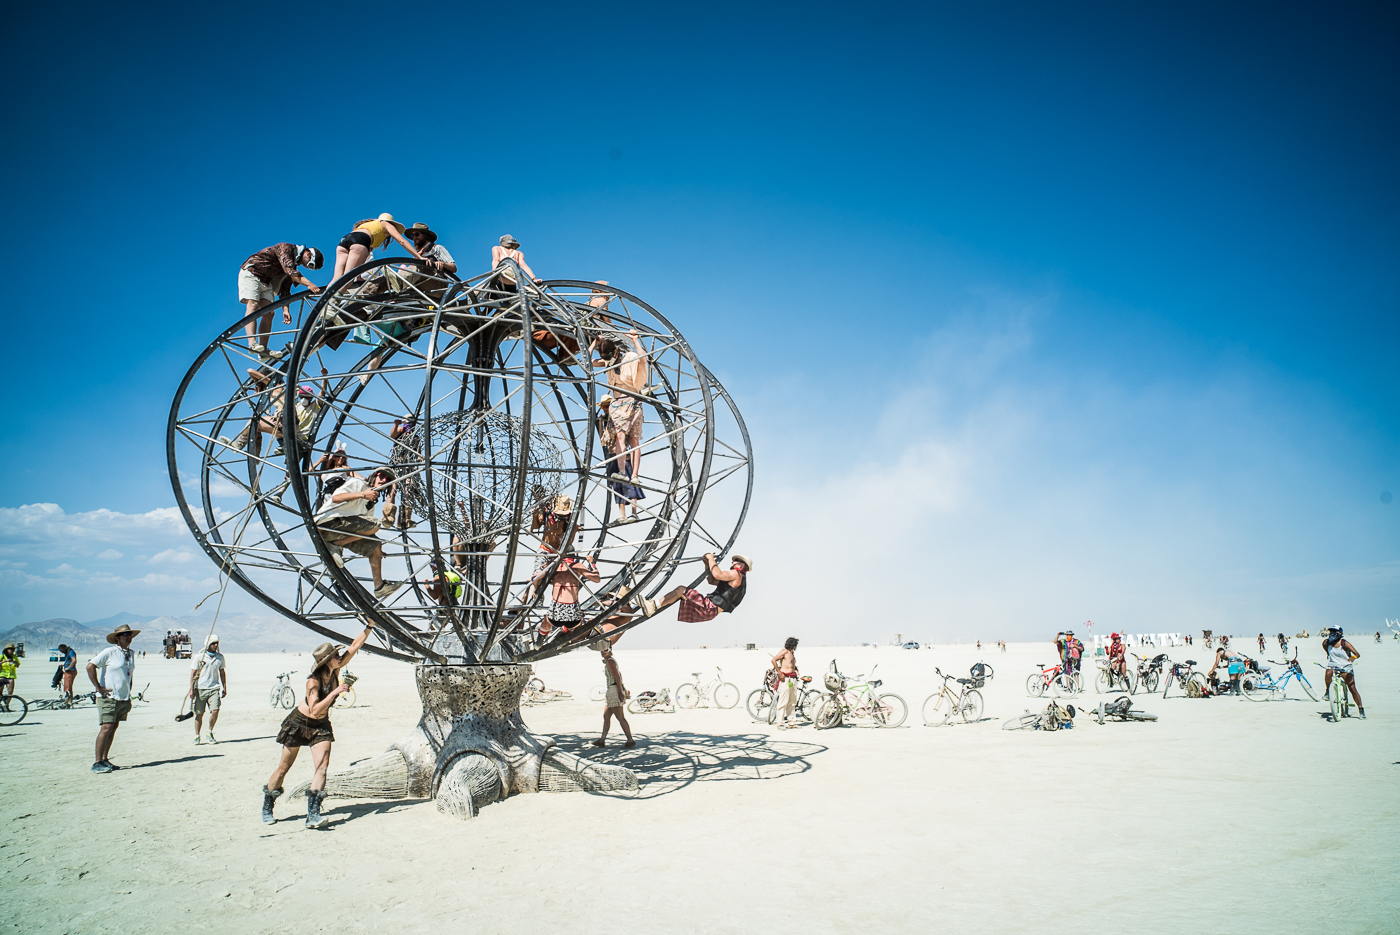 Dusty Art, Burning Man 2014: In Dust We Trust - Photos of a Dusty Playa